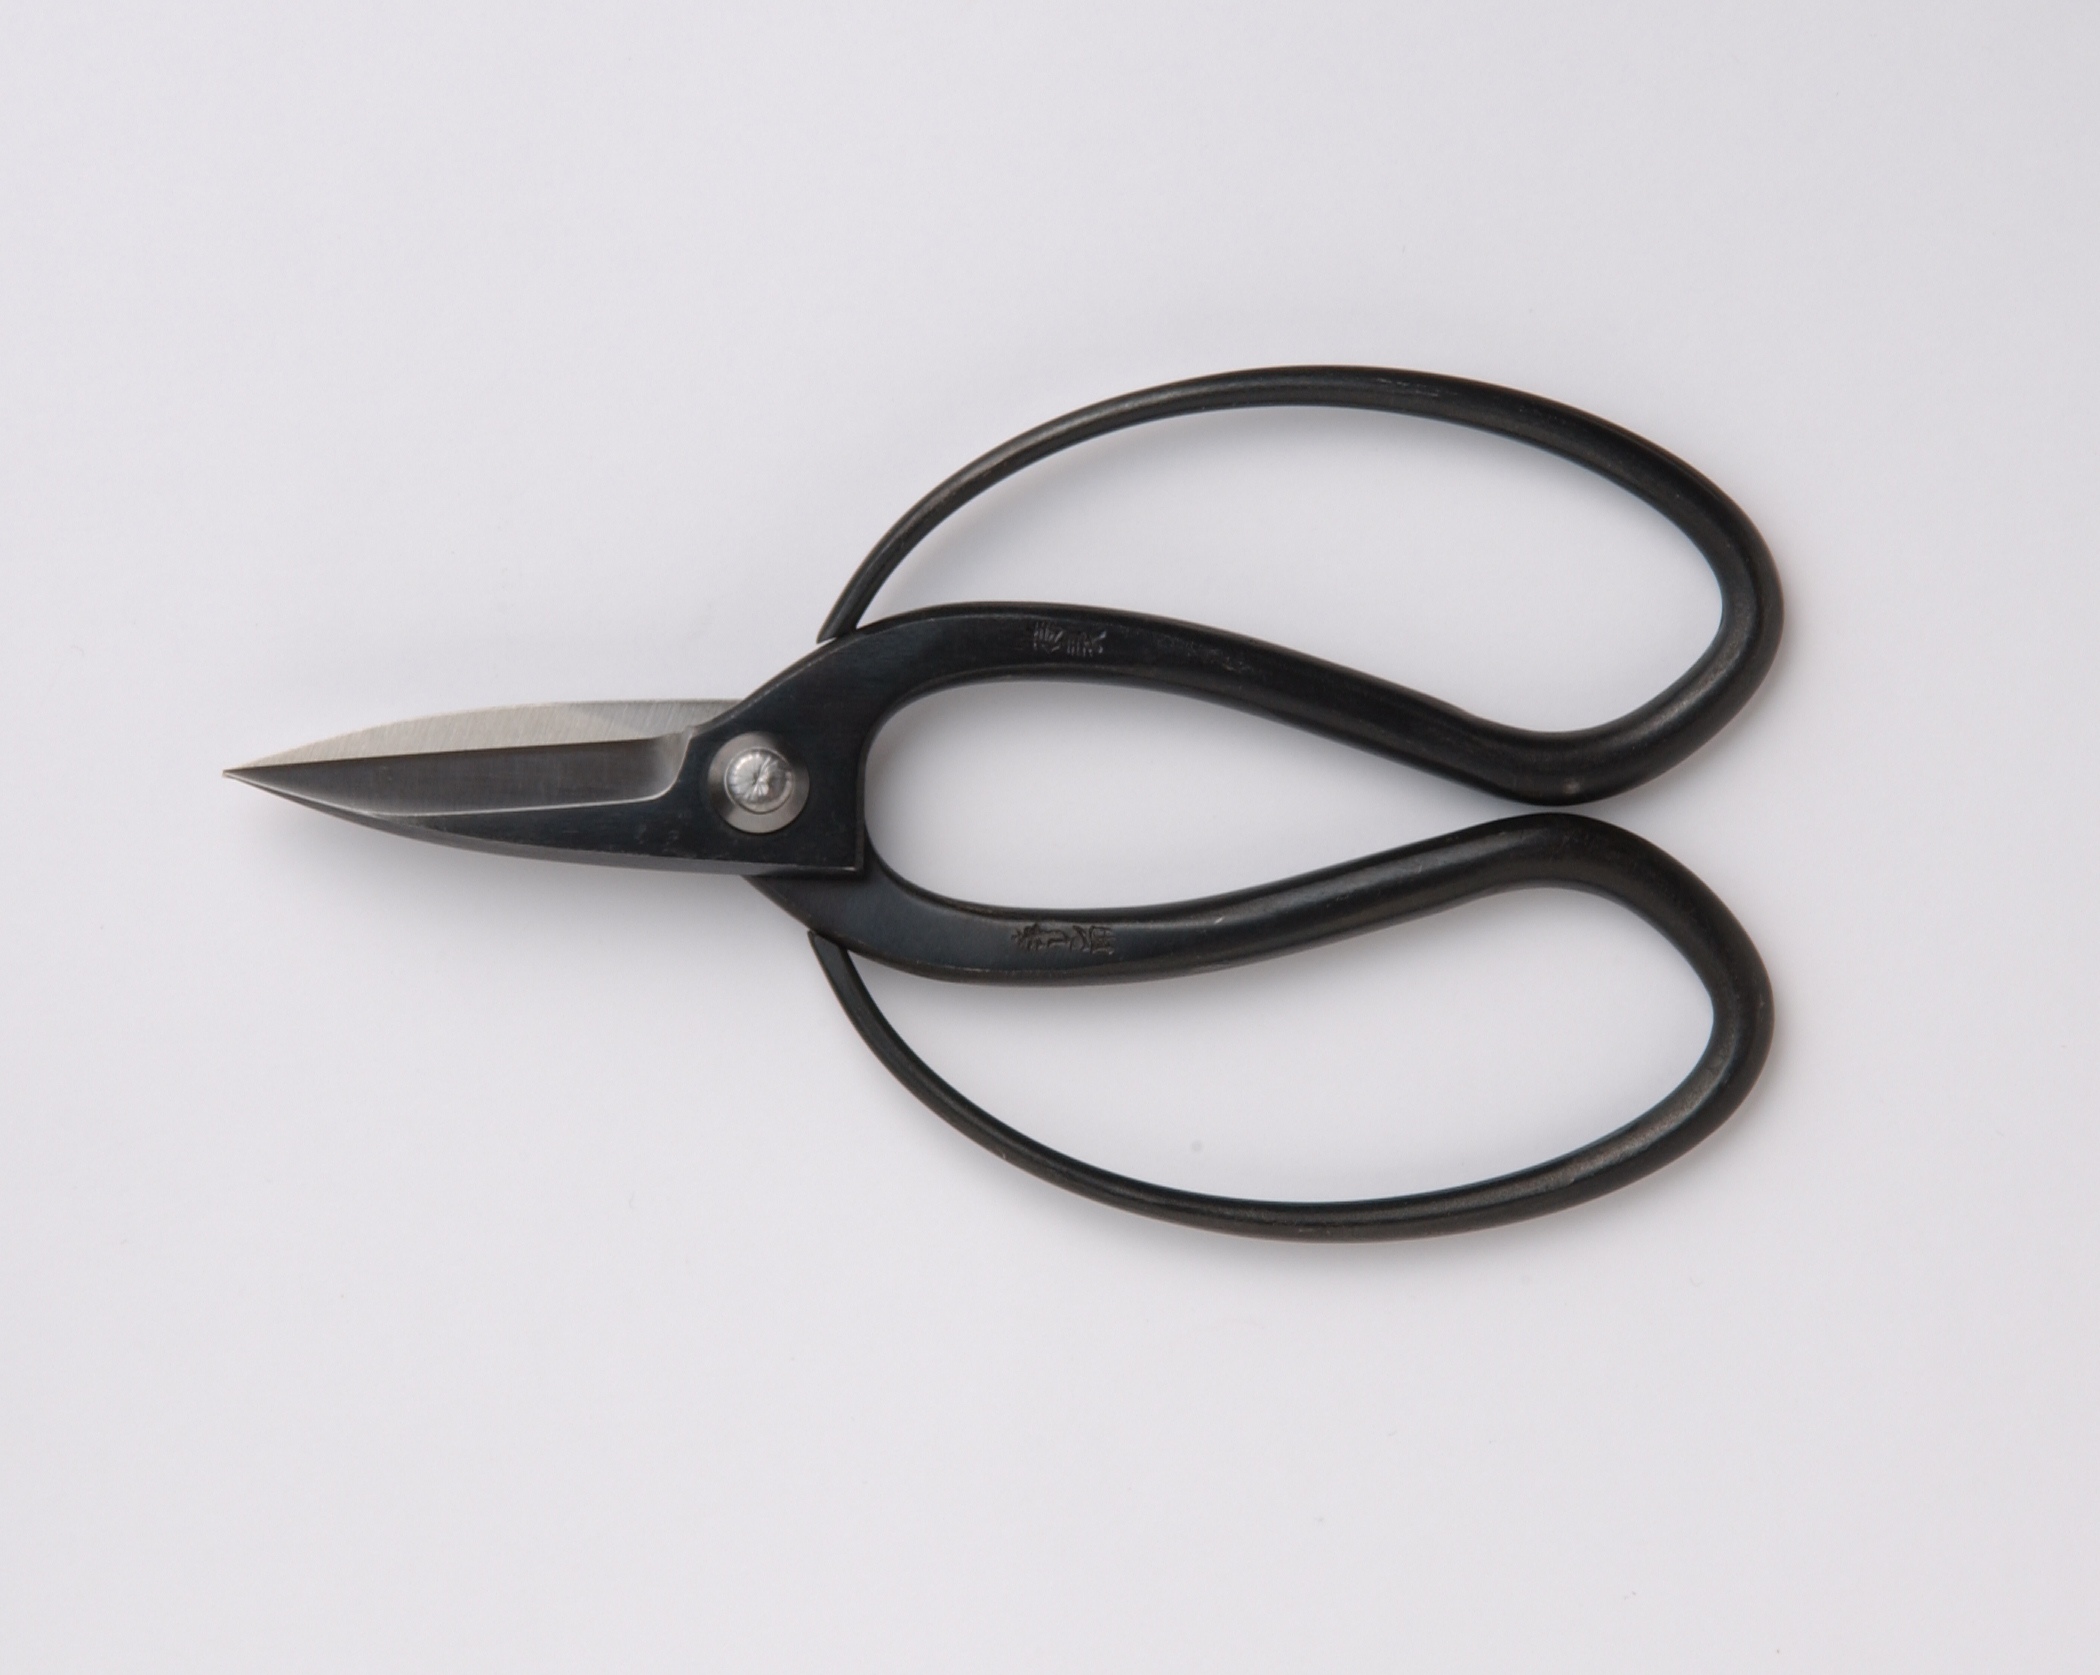 japanese scissors